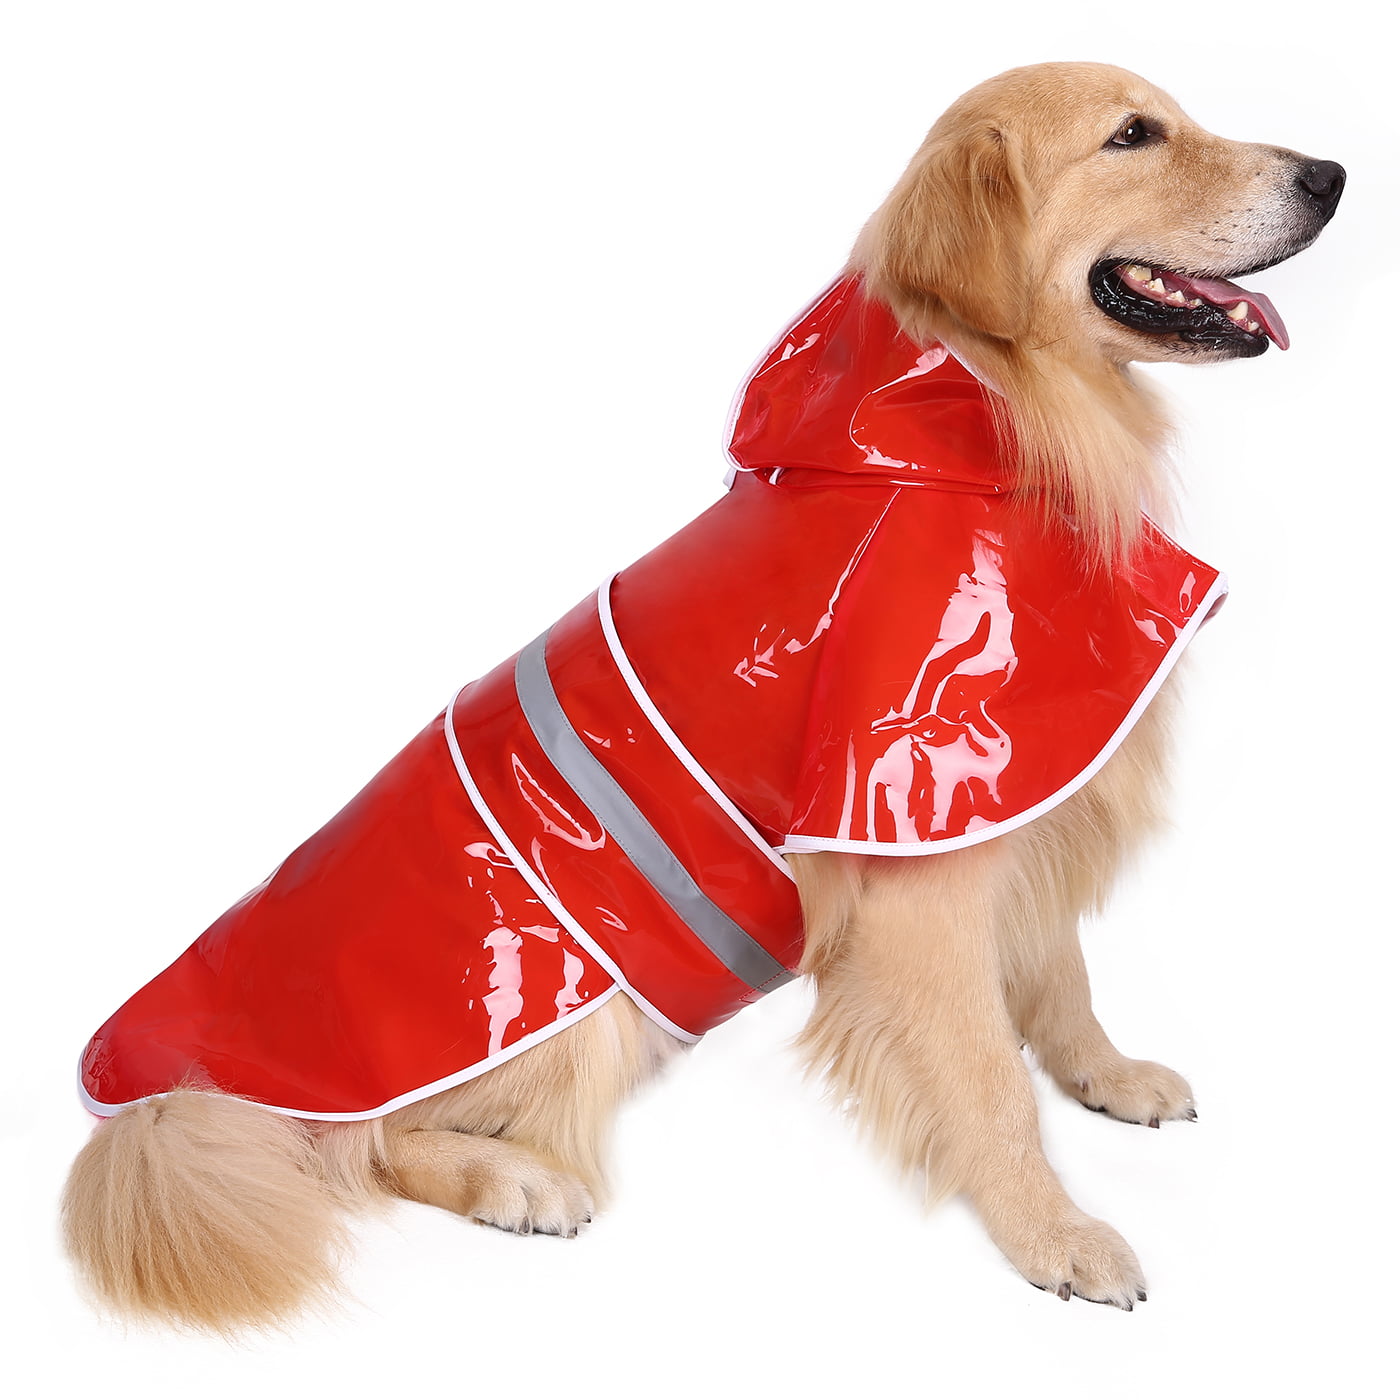 SENYE PET Dog Raincoat Lightweight Waterproof Clothes Ajustable Pet Dog Rain Jacket Poncho with Visibility Safety Strip Reflective & Leash Hole Dog Vest for Small Medium Large Dogs Puppy 